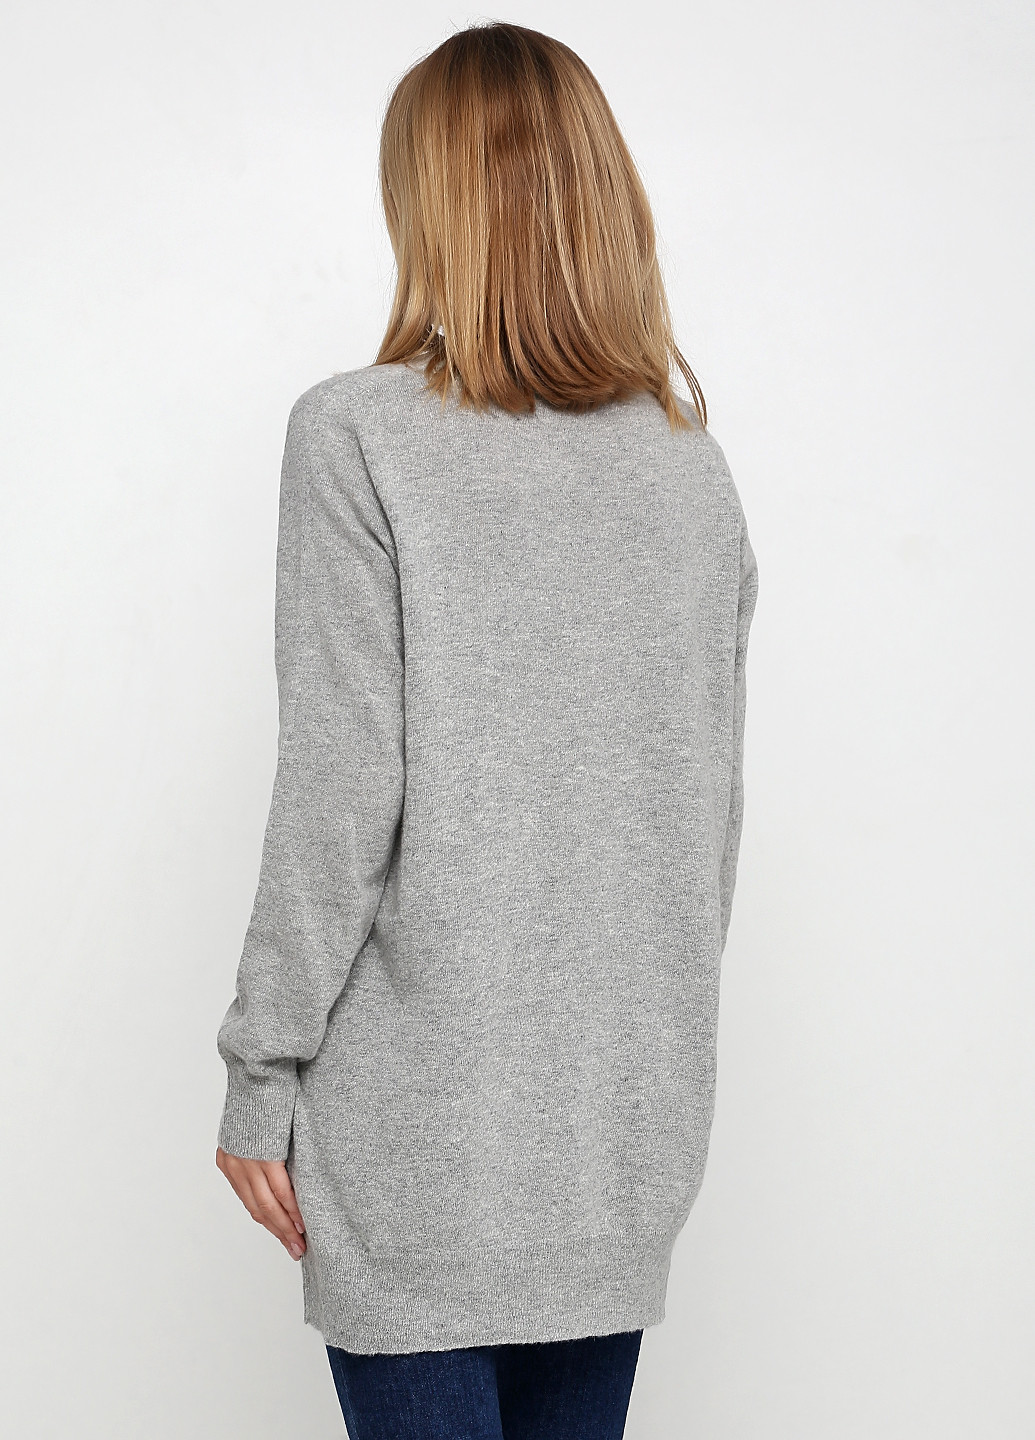 Светло-серый демисезонный пуловер пуловер Pinko